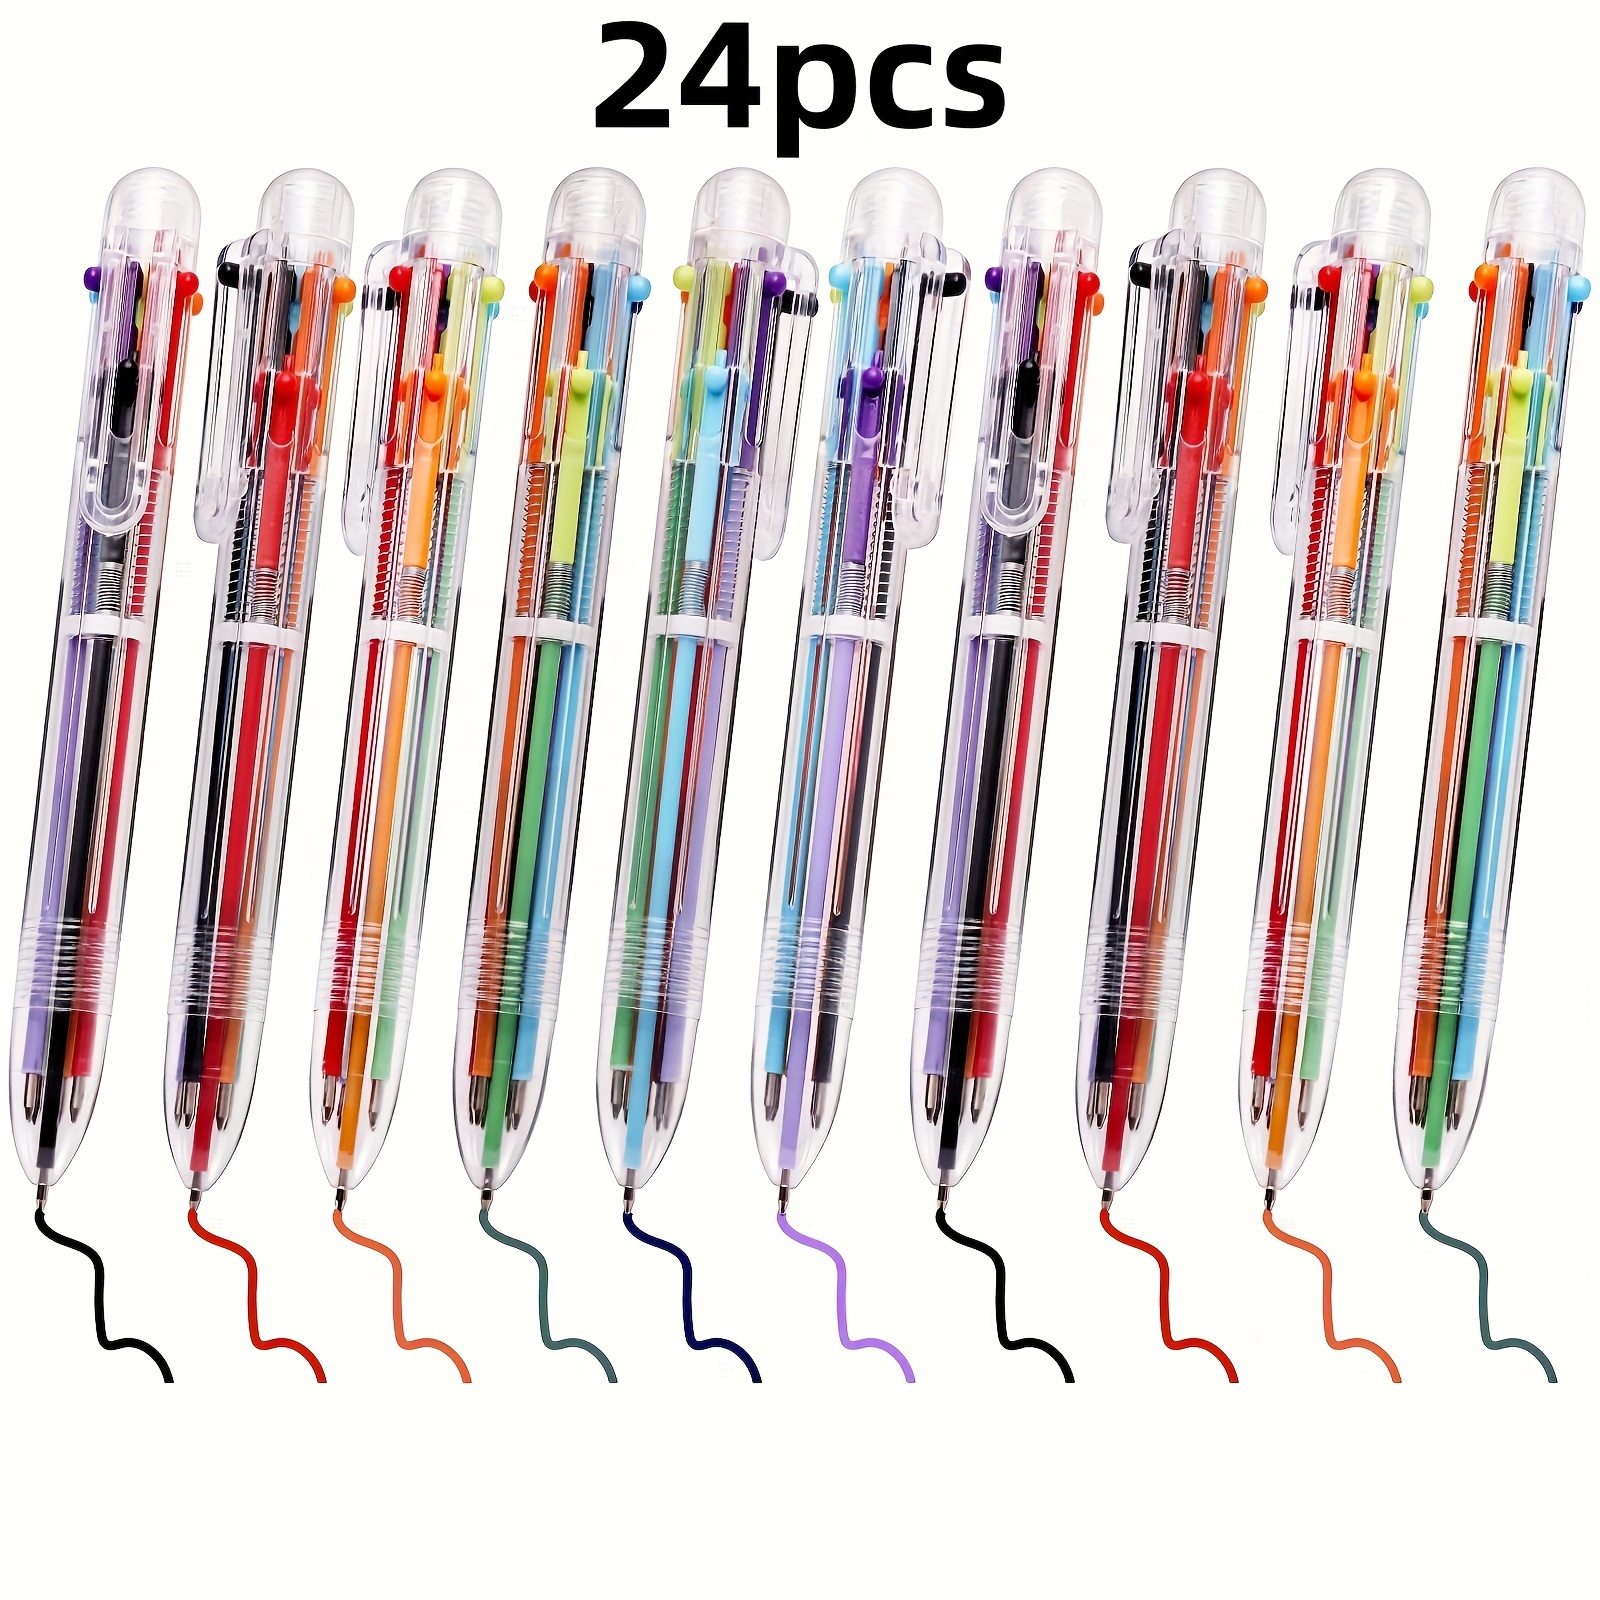 

12/24pcs 0.5mm 6-in-1 Multicolor Ballpoint Pen: 6 Transparent Ballpoint Pen For Office, School & Gifts